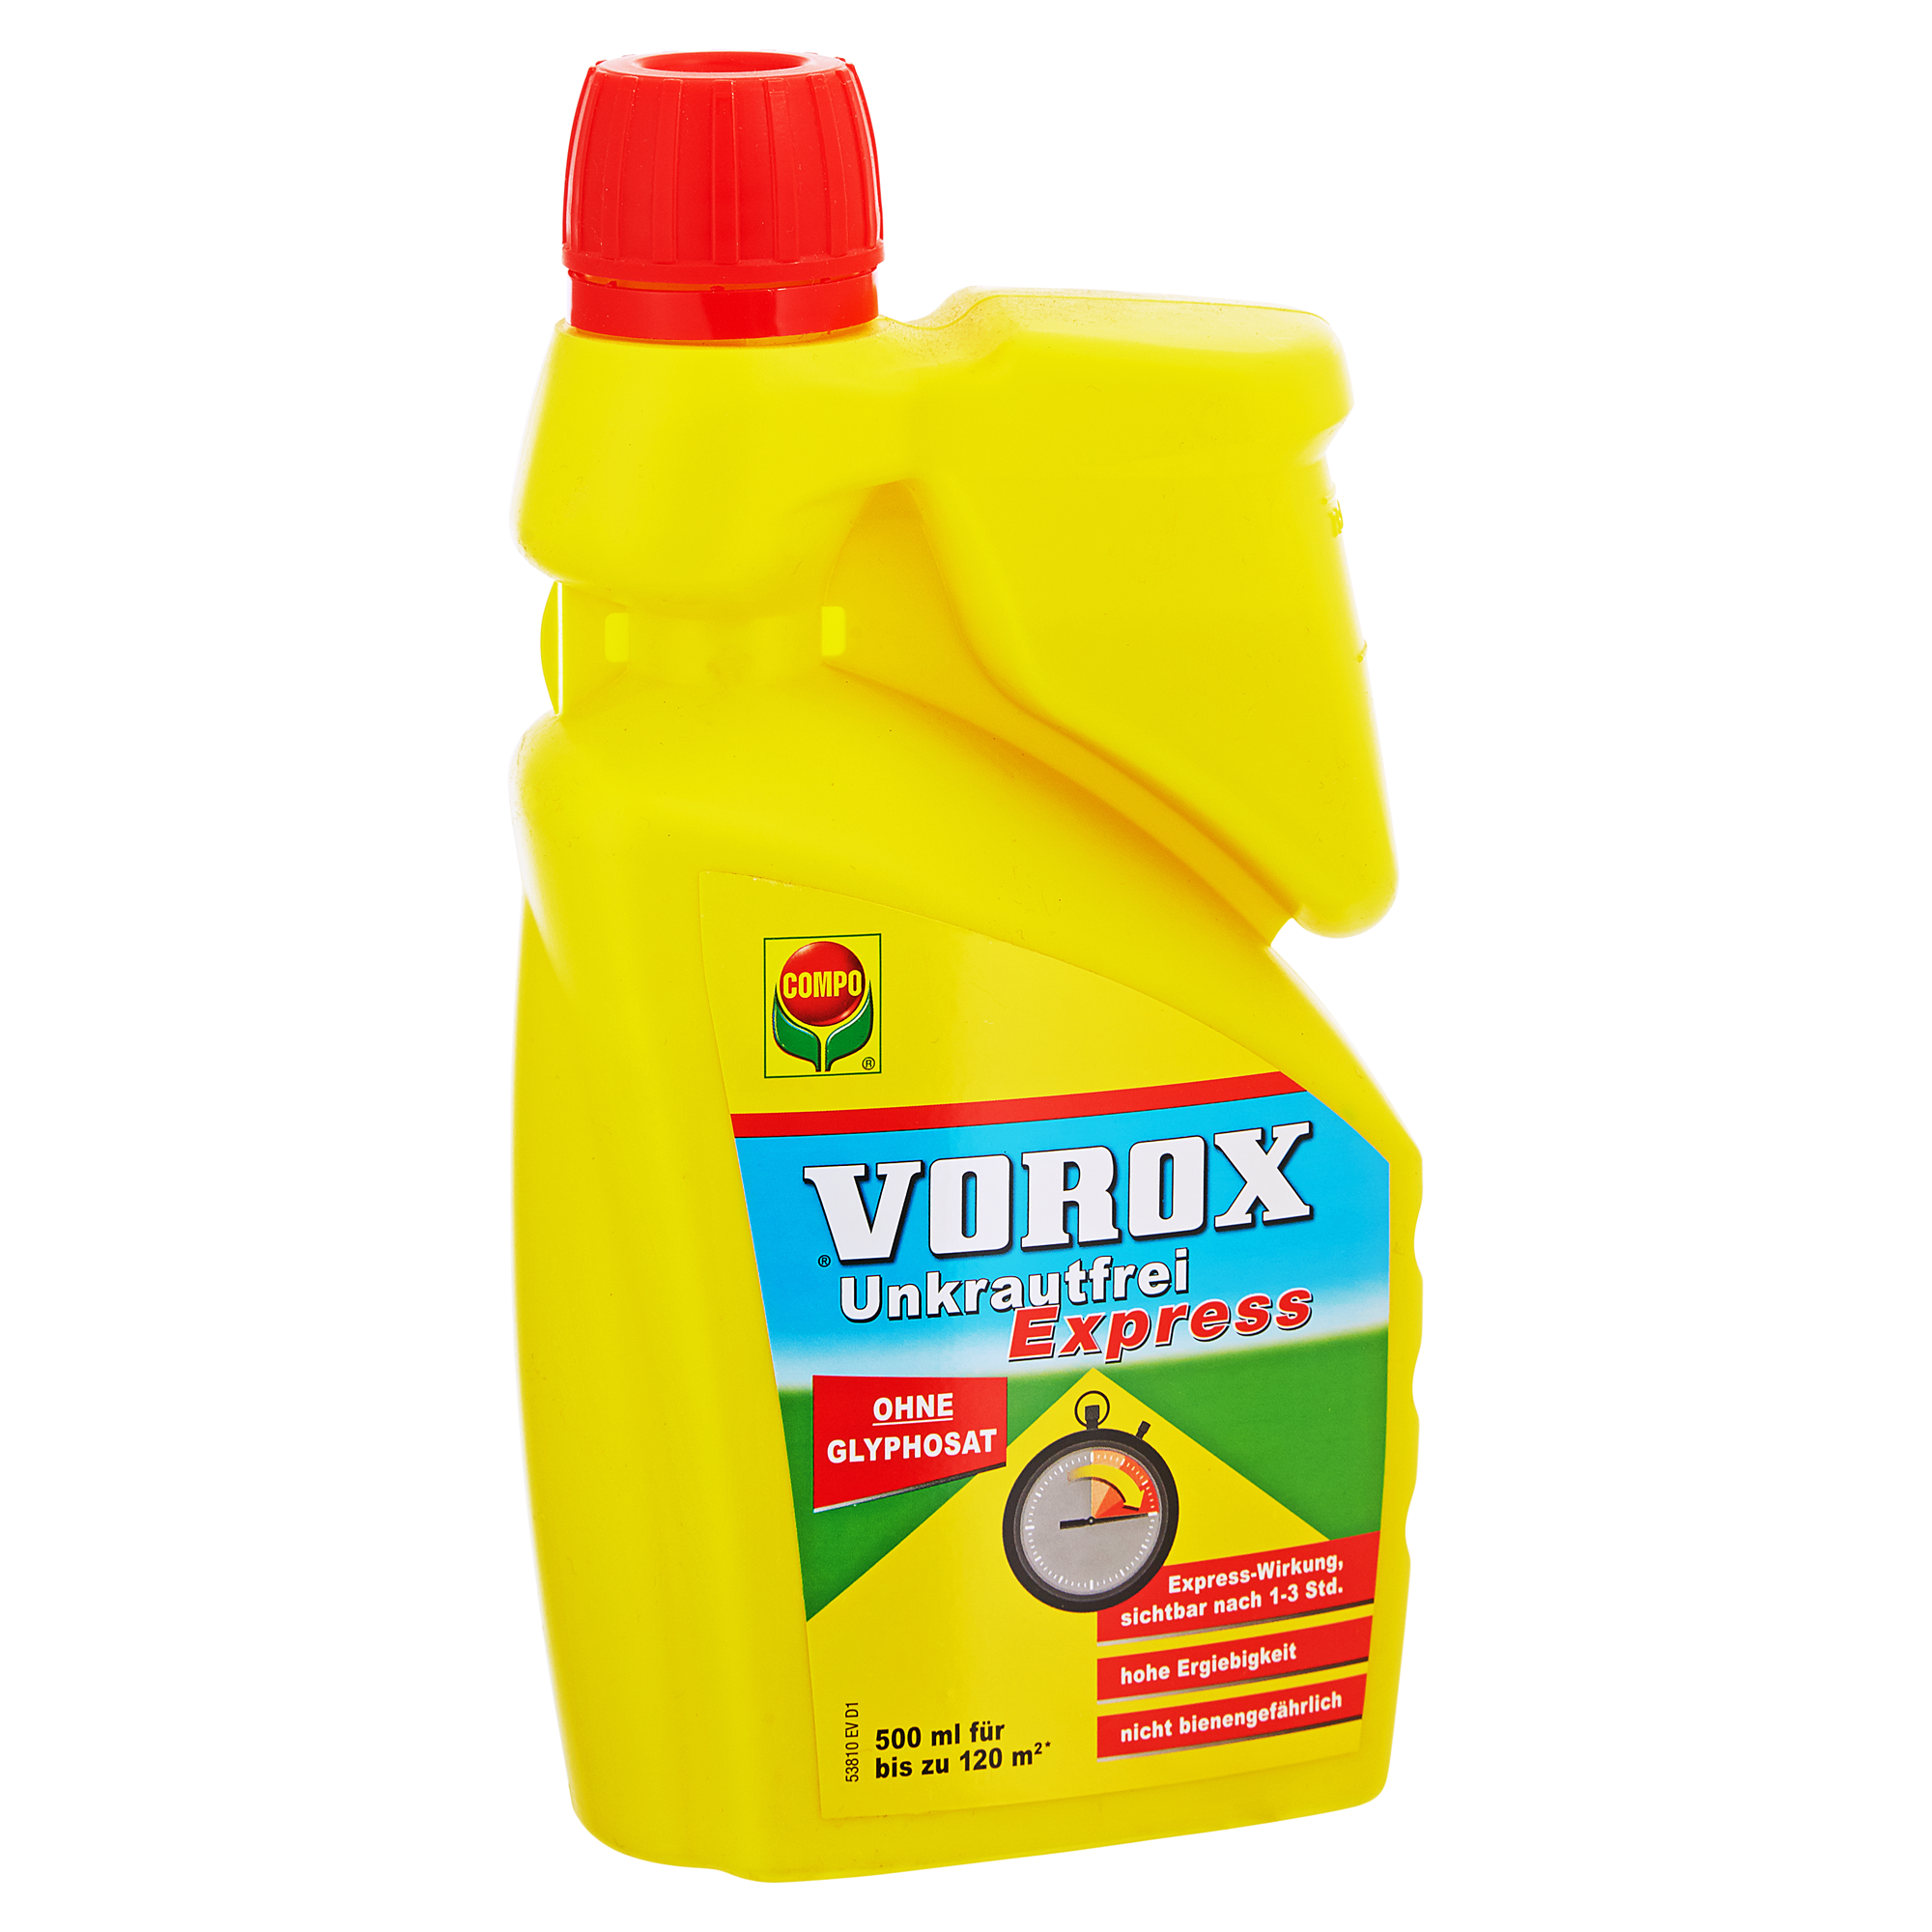 Vorox® Unkrautfrei Express 500 ml + product picture